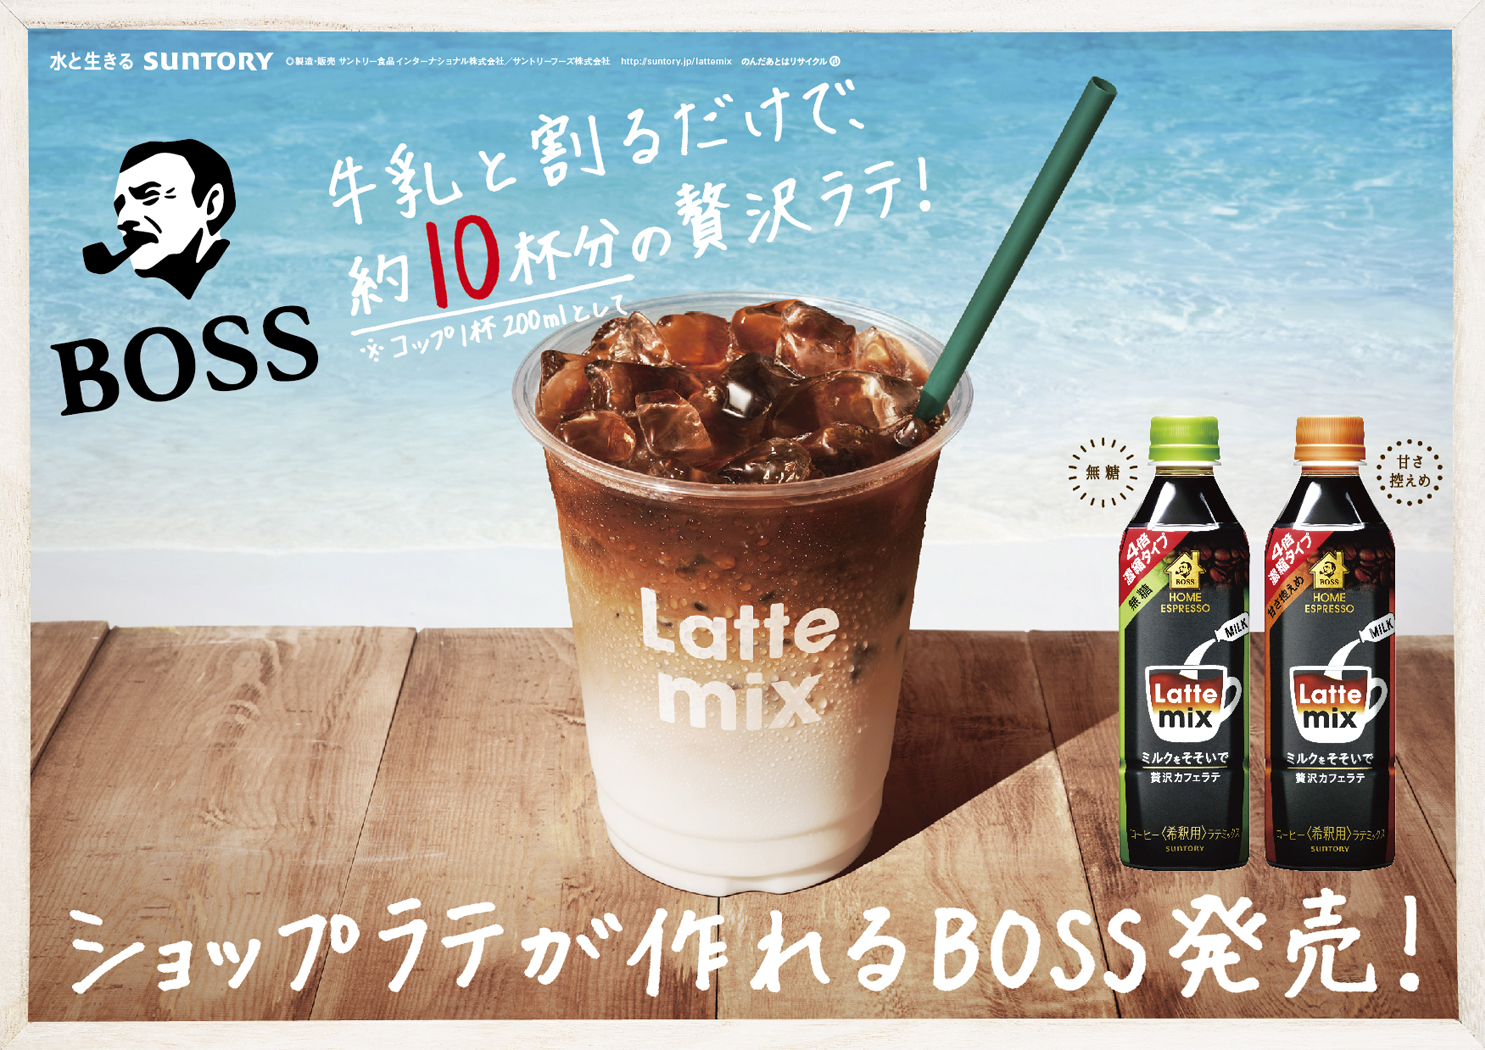 Suntory boss LatteMix B3board